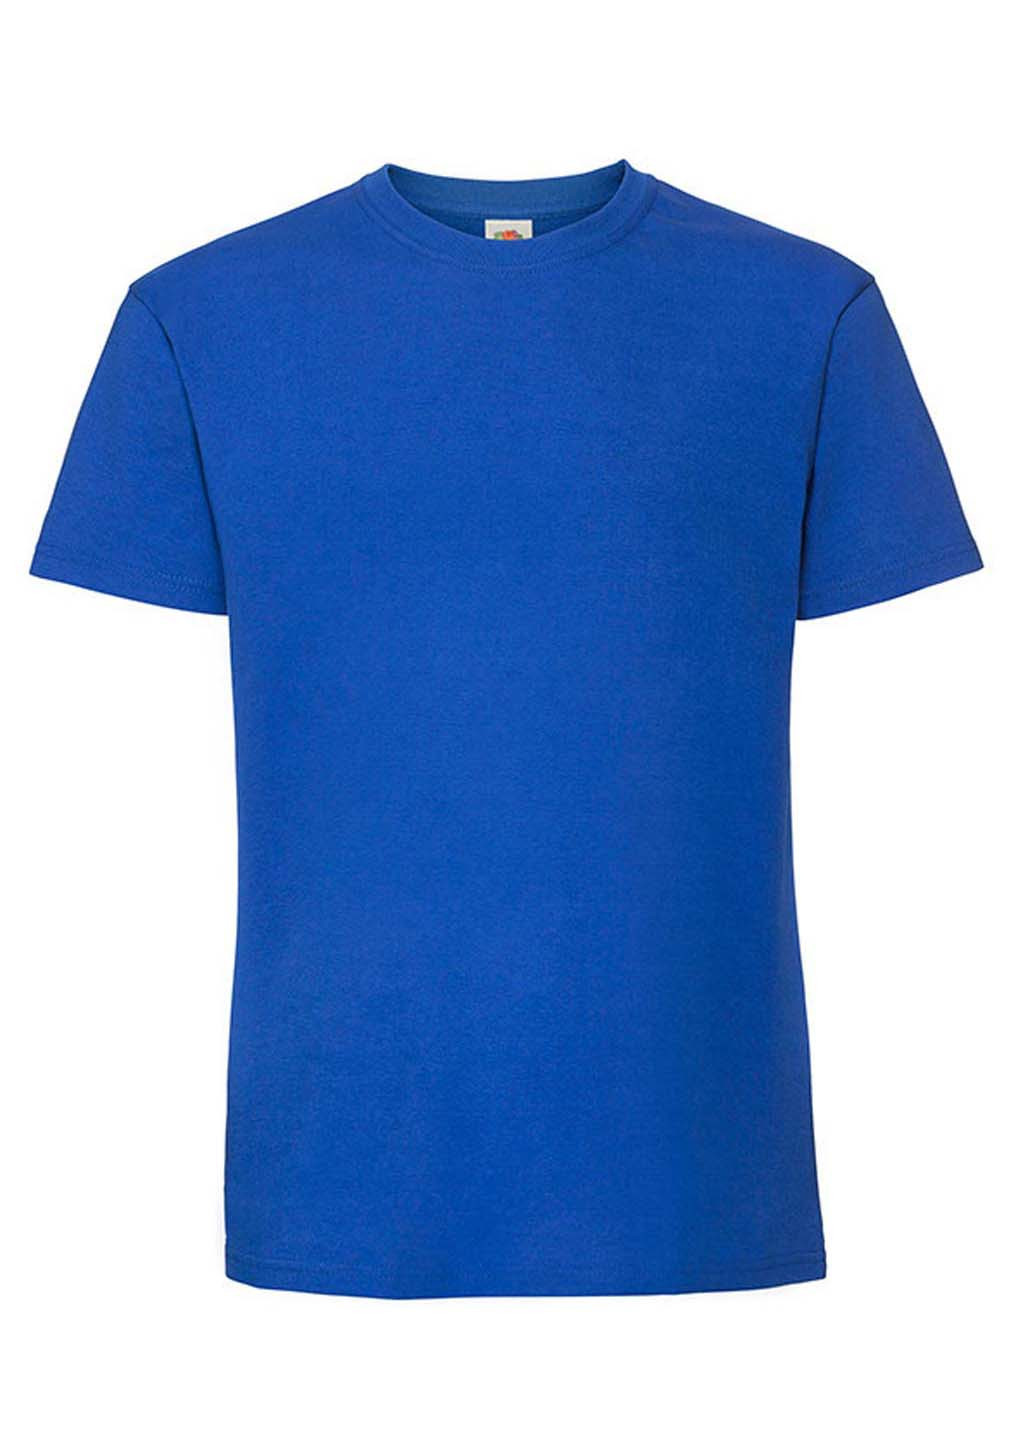 Синяя футболка Fruit of the Loom Ringspun premium